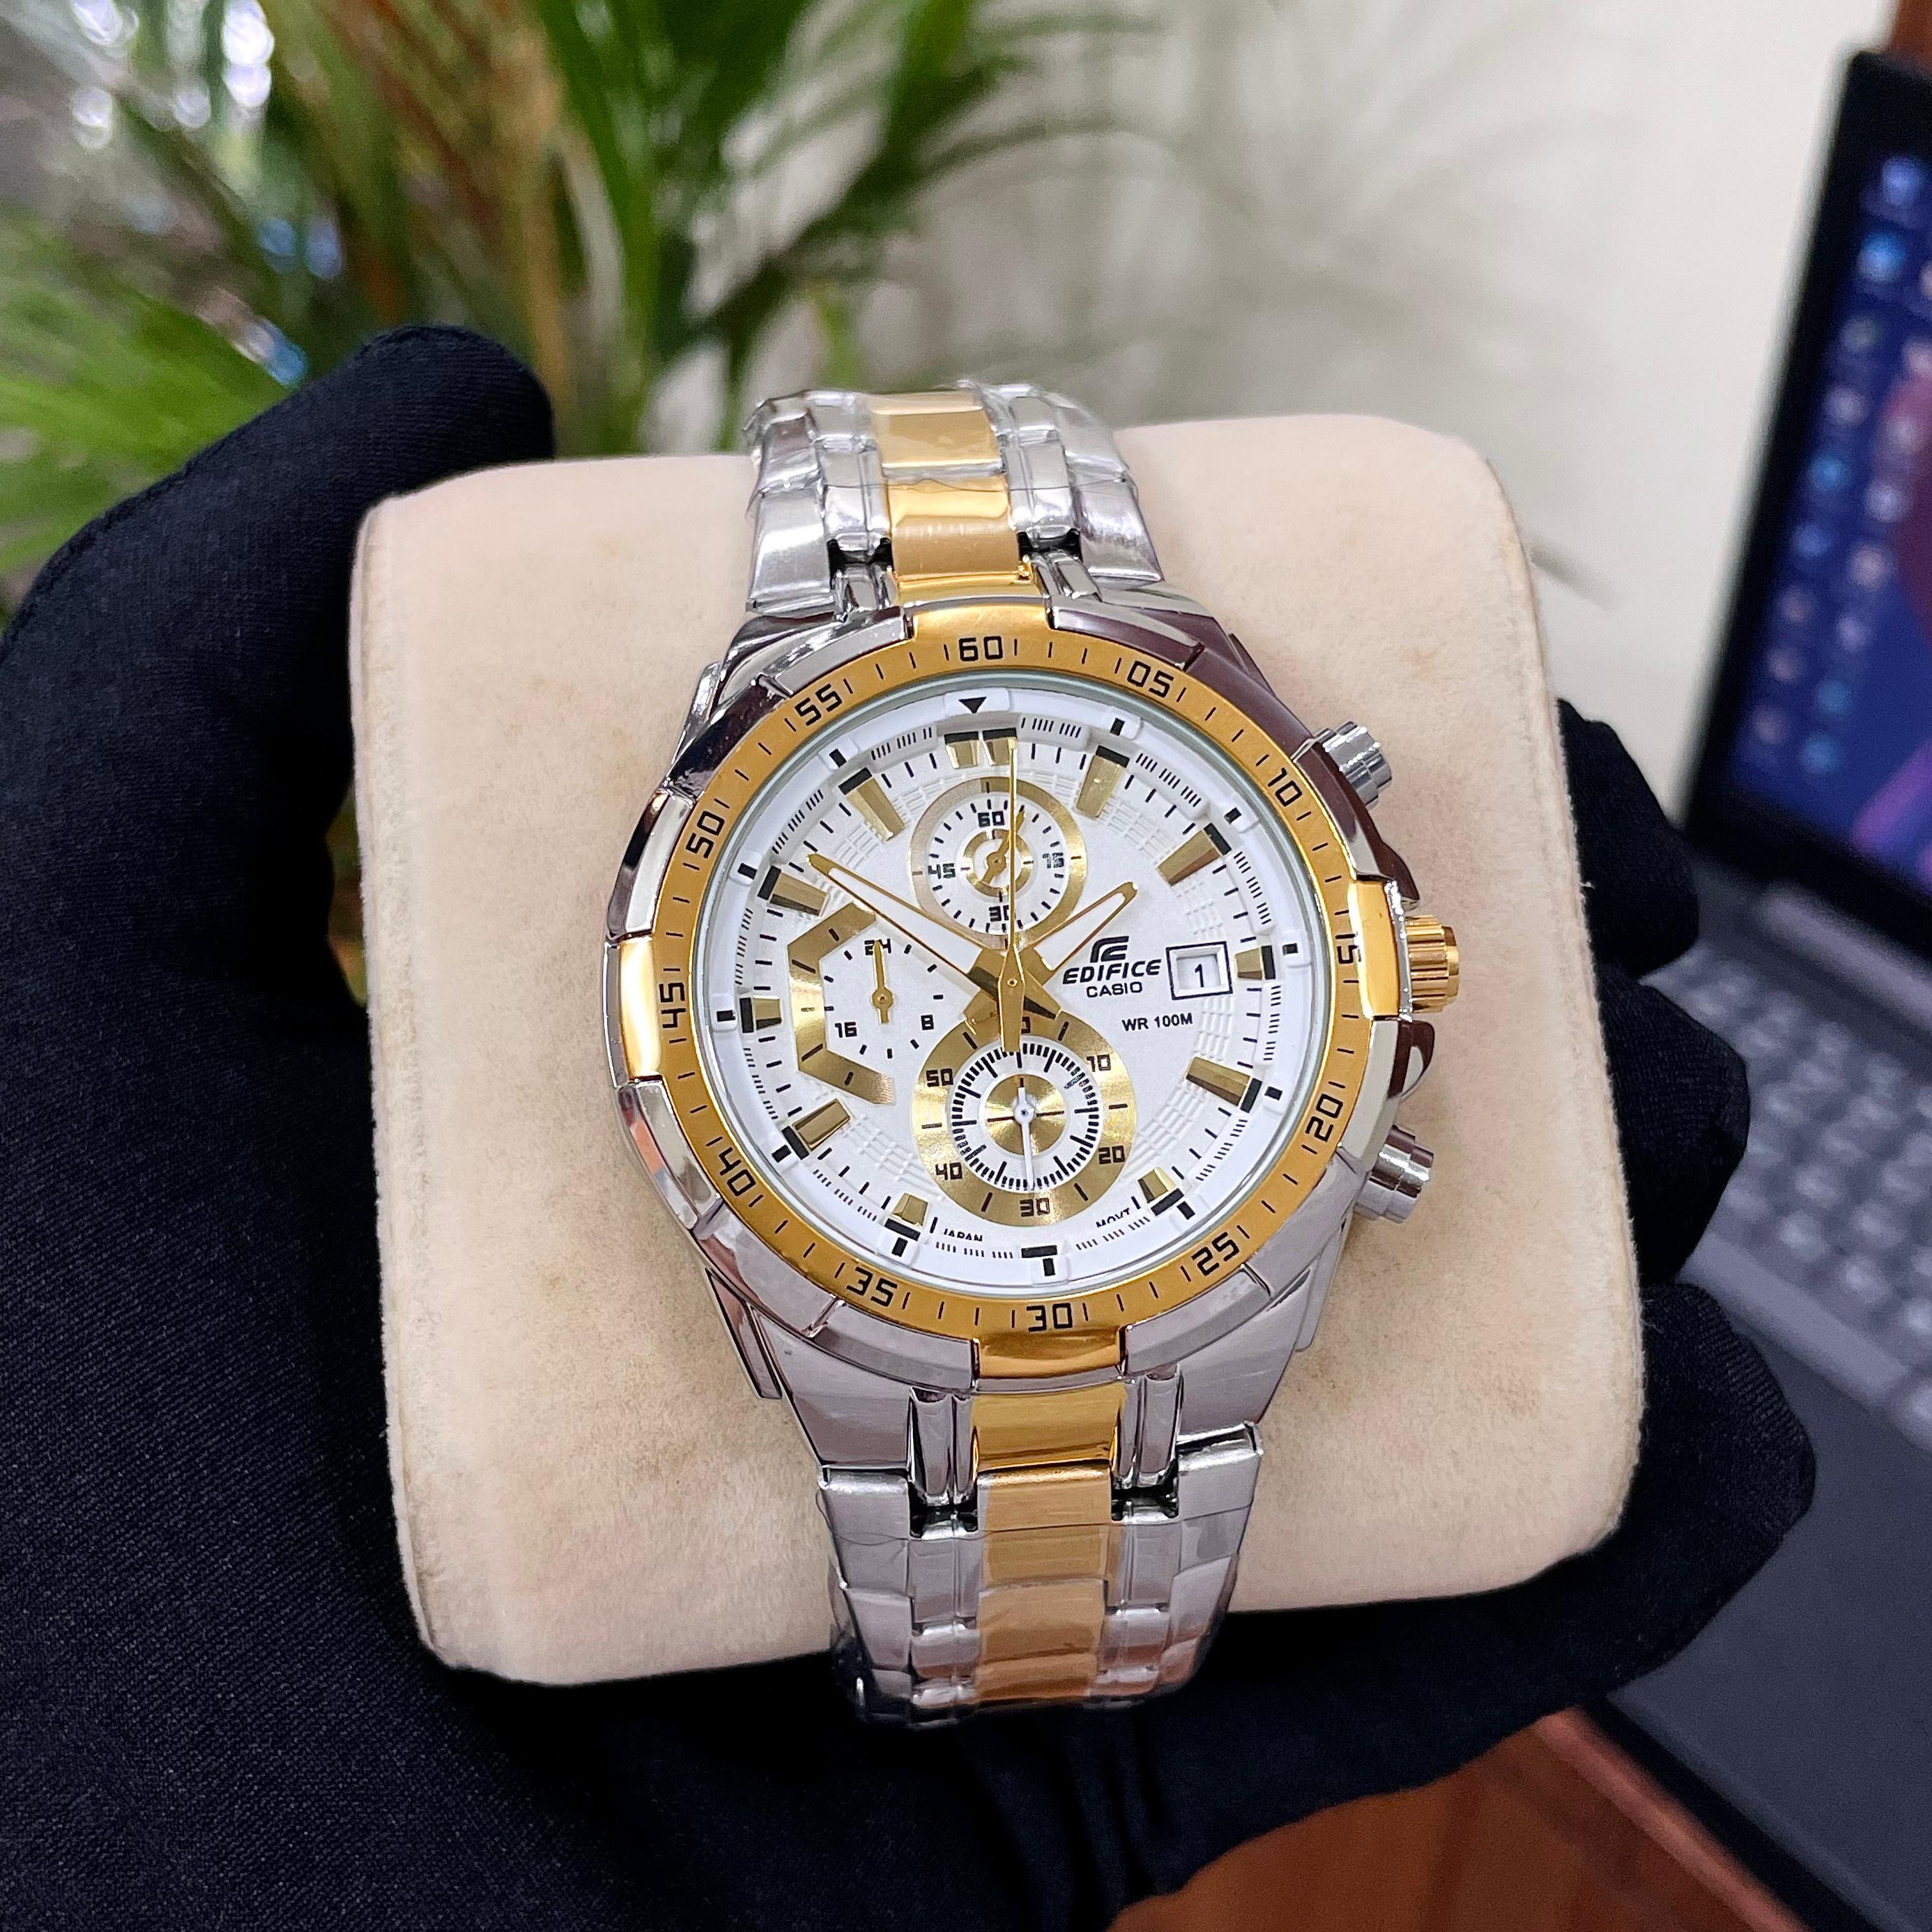 Efr 539 Premium Luxury Mens watch - AmazingBaba